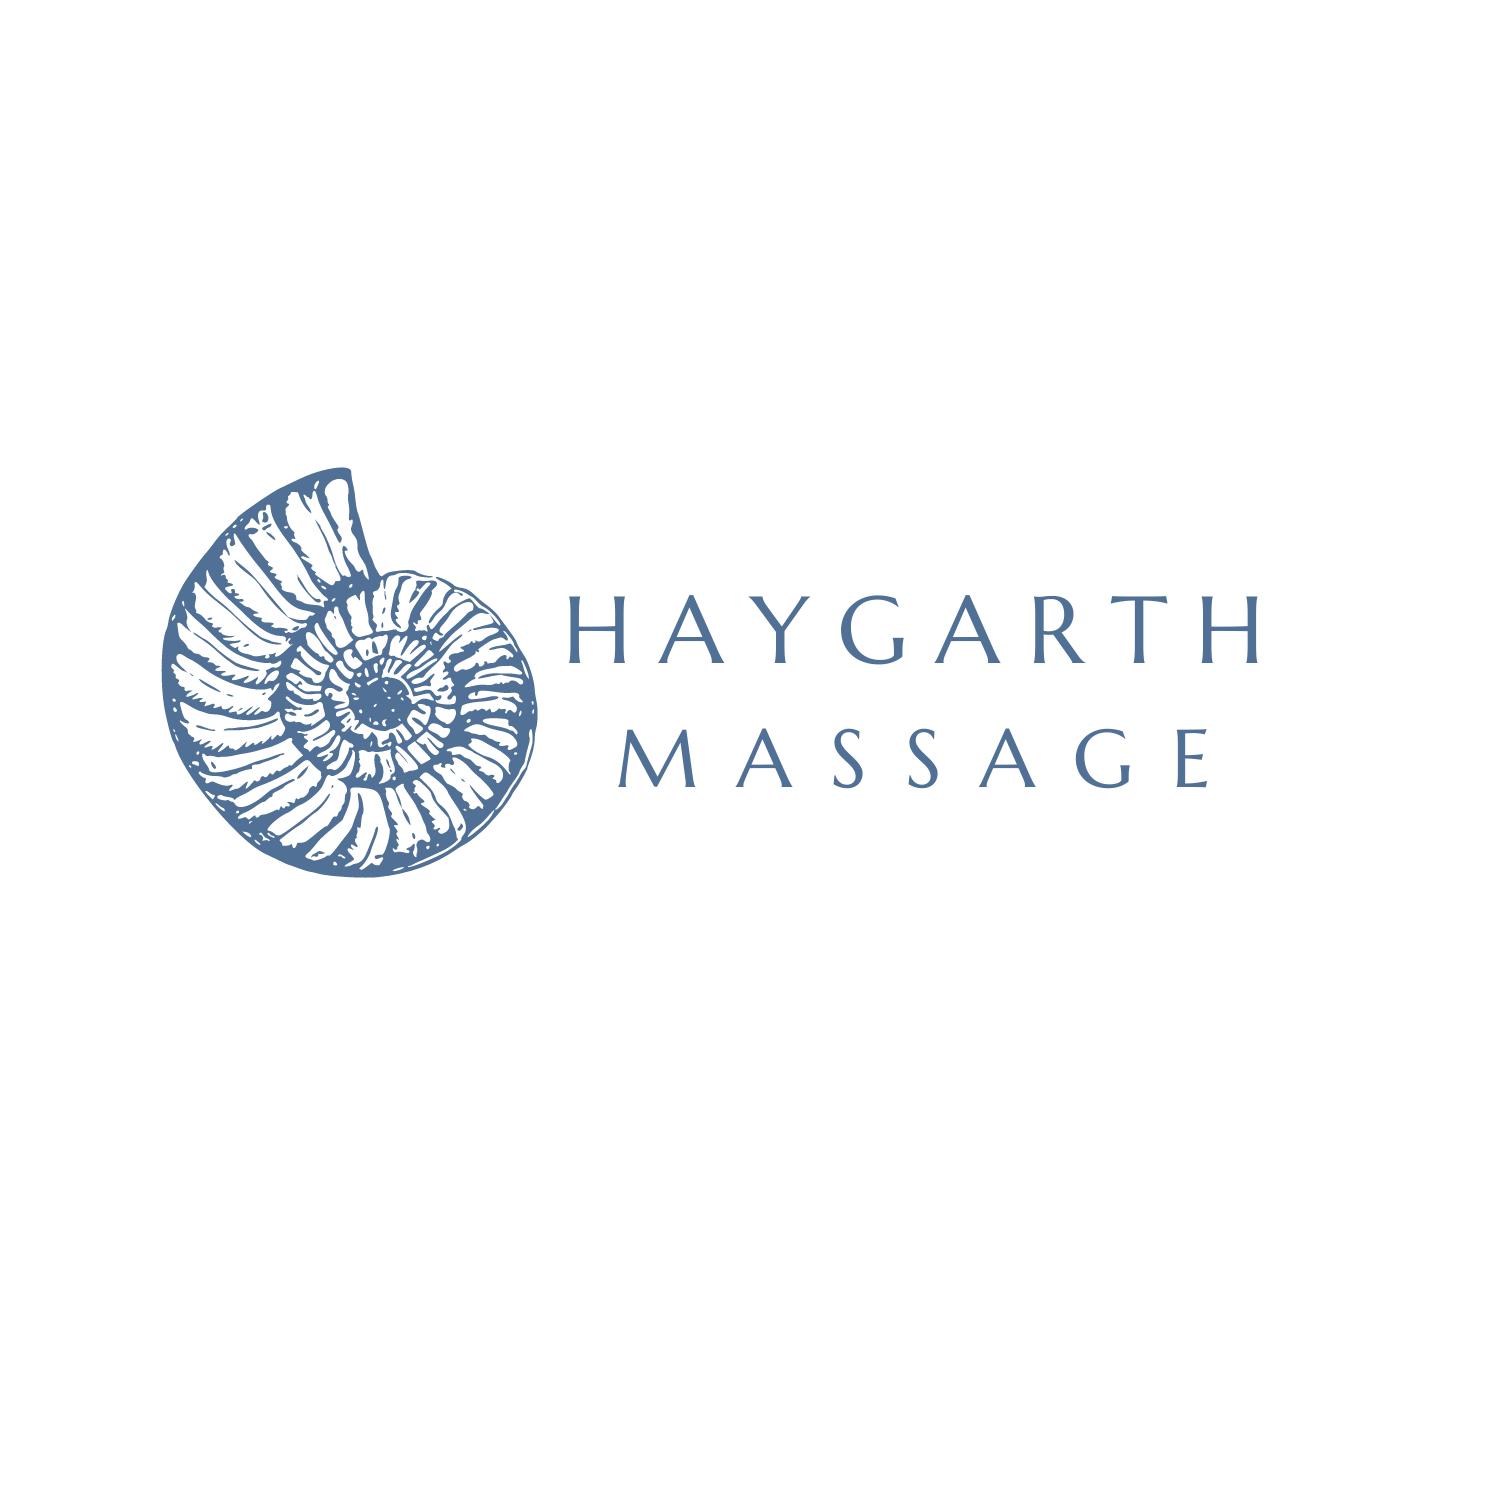 Haygarth Massage